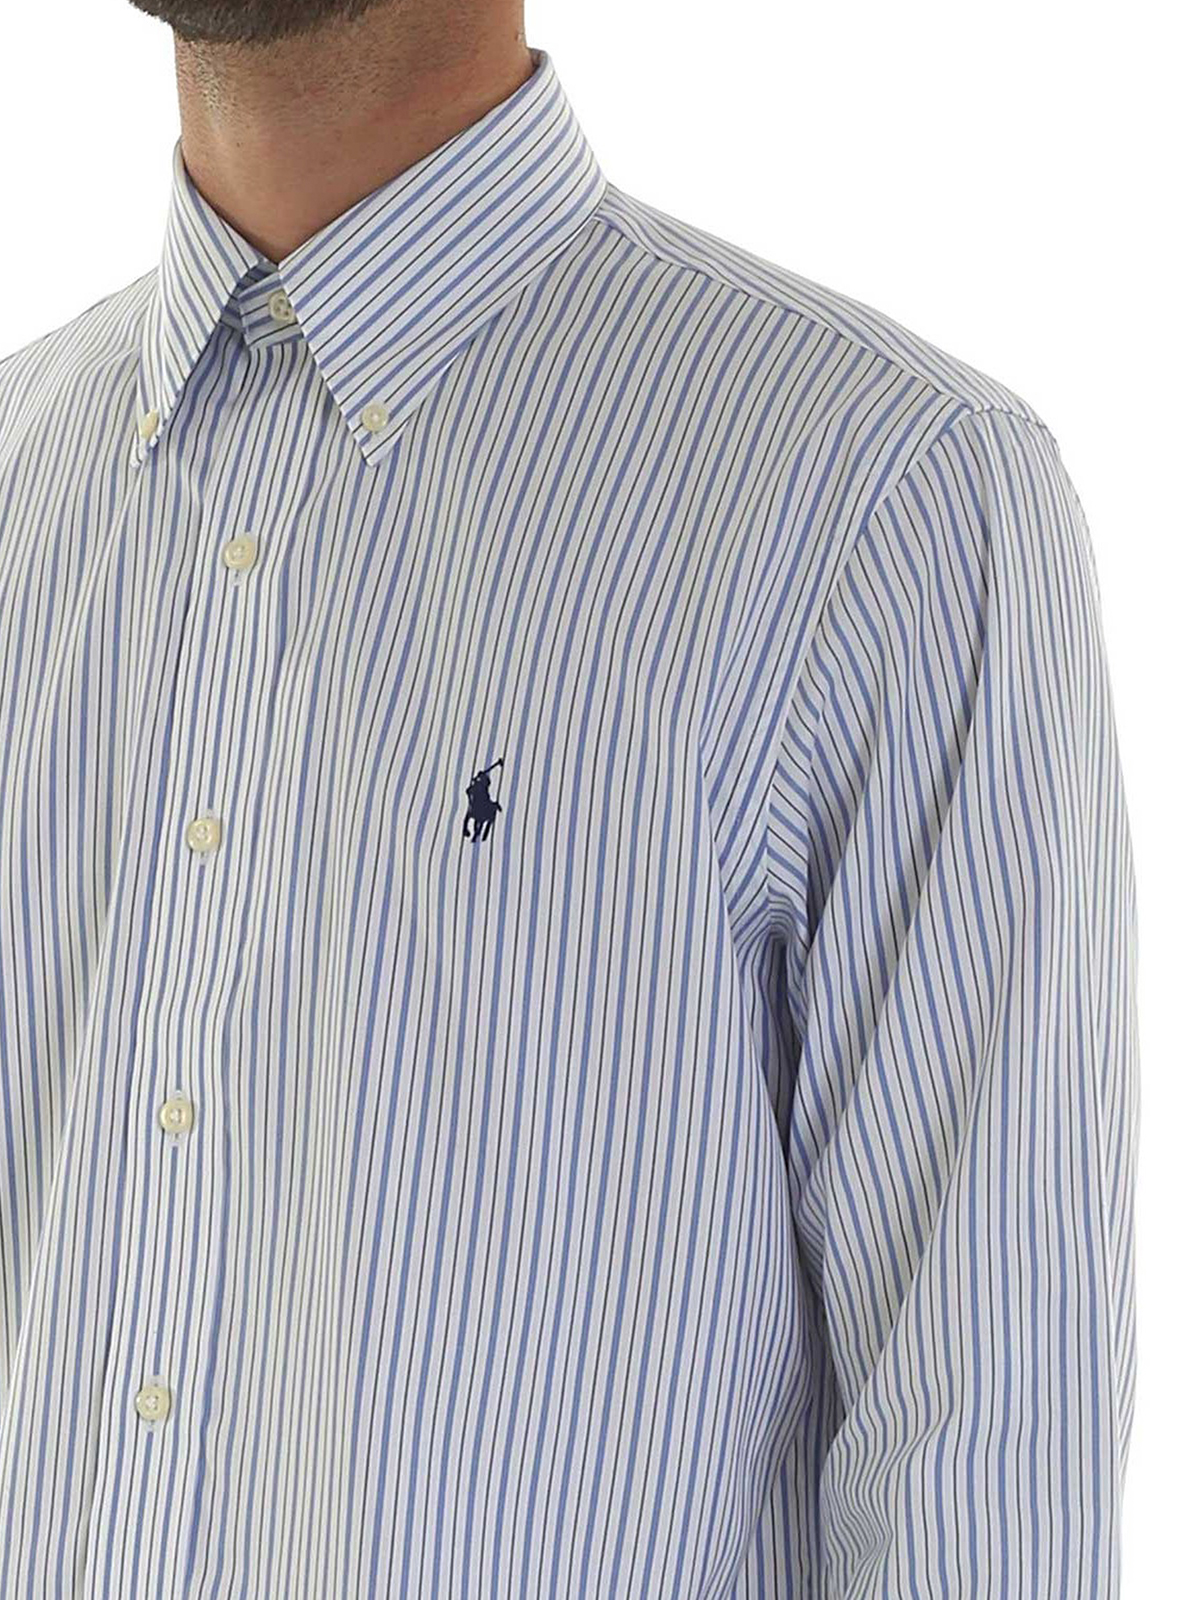 polo striped button down shirt